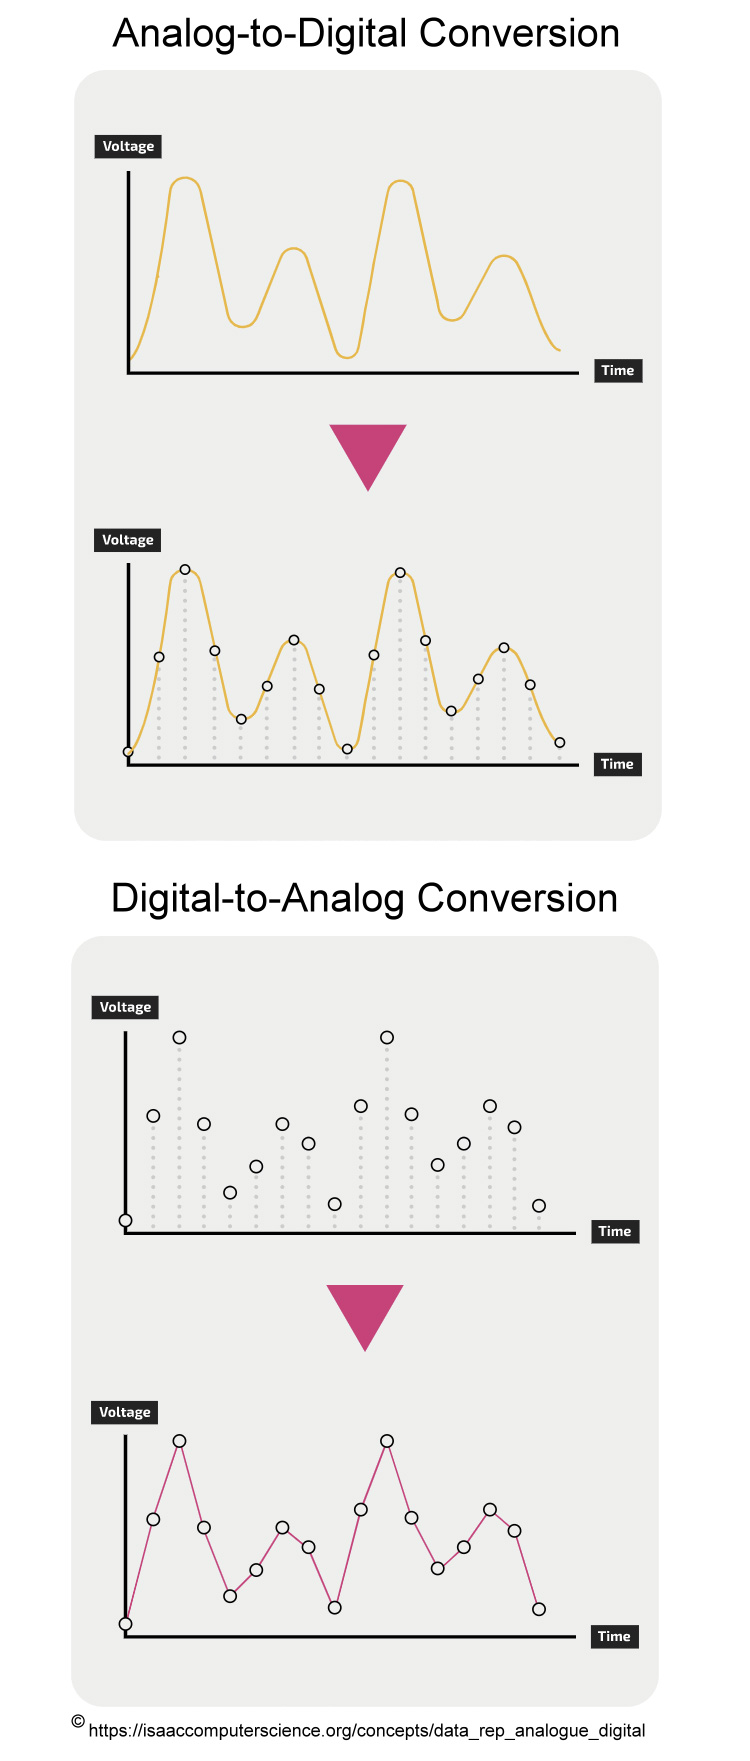 Digital-to-Analog Conversion and Analog-to-Digital Conversion